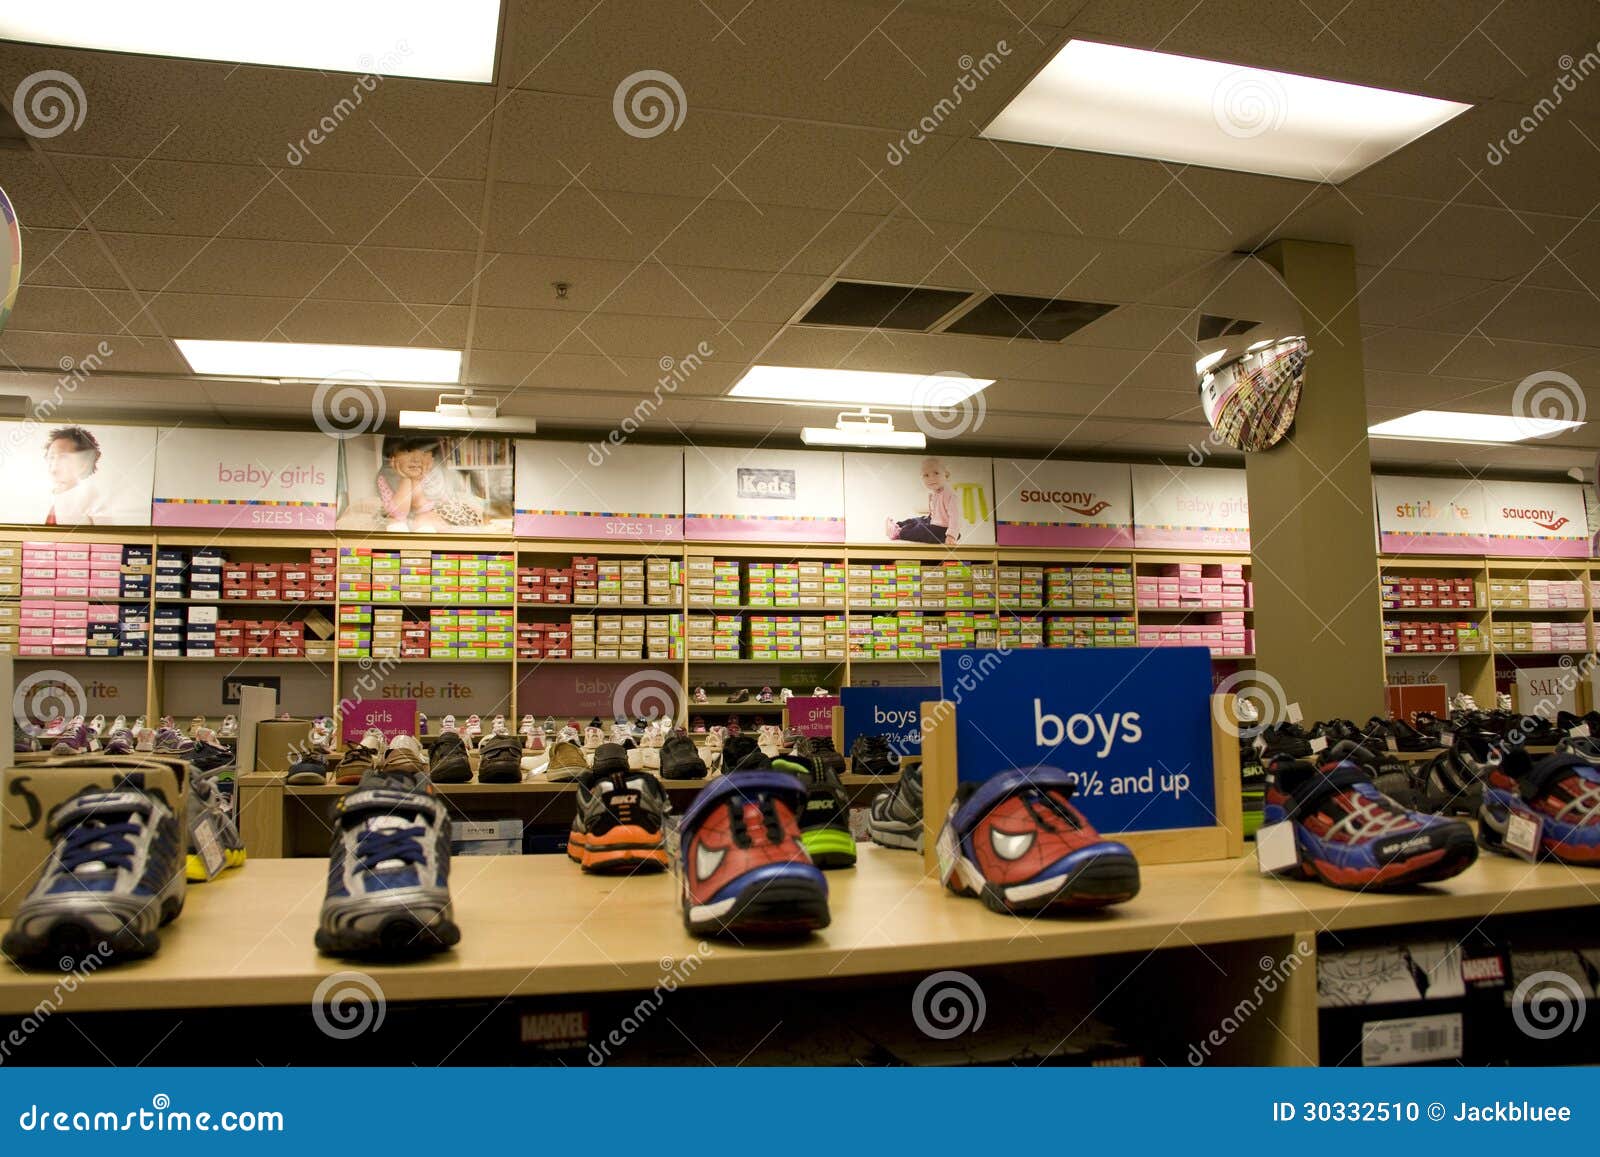 kids-sport-shoe-store-selling-popular-children-s-shoes-stride-rite ...